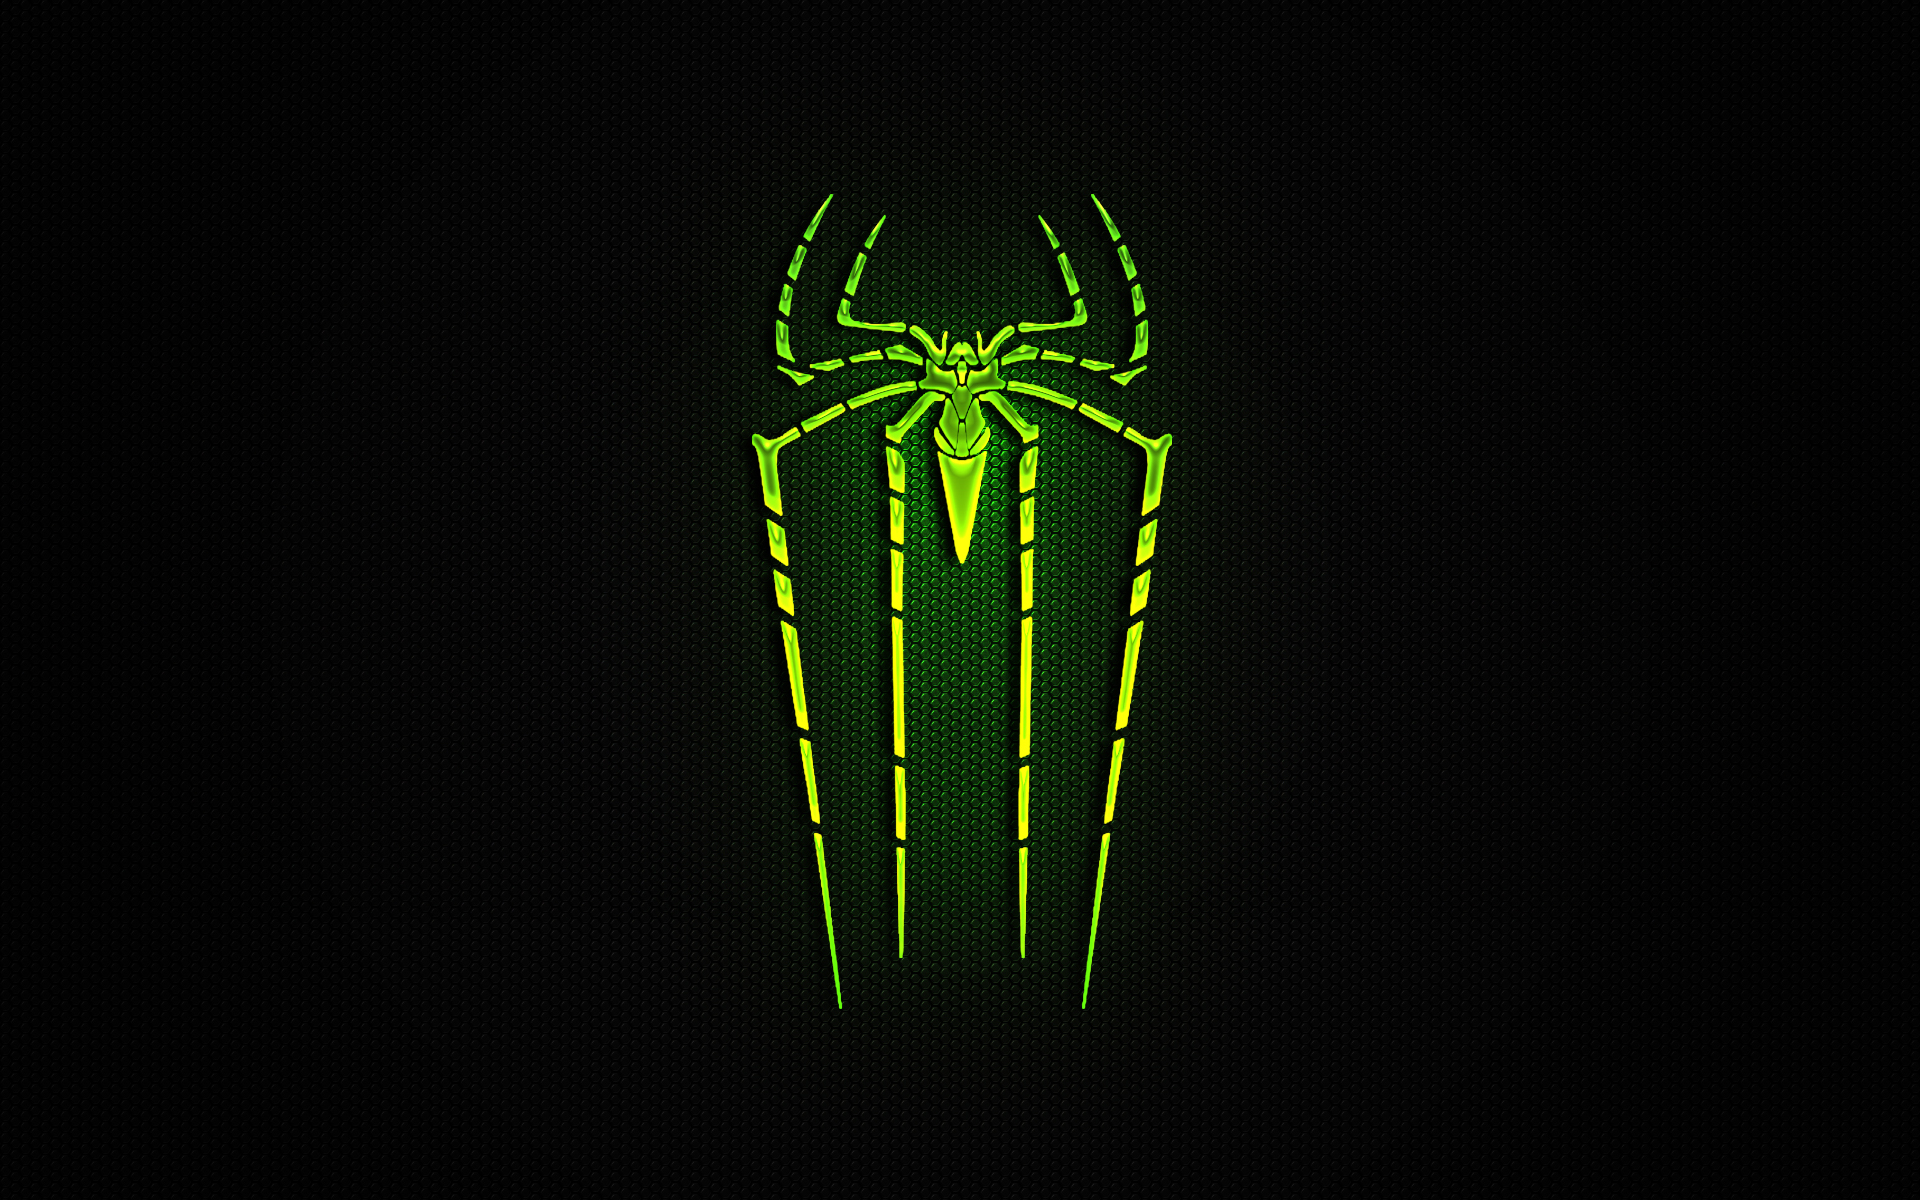 The Amazing Spider-Man 2 (Movie Logo Edition) by mojojojolabs on DeviantArt